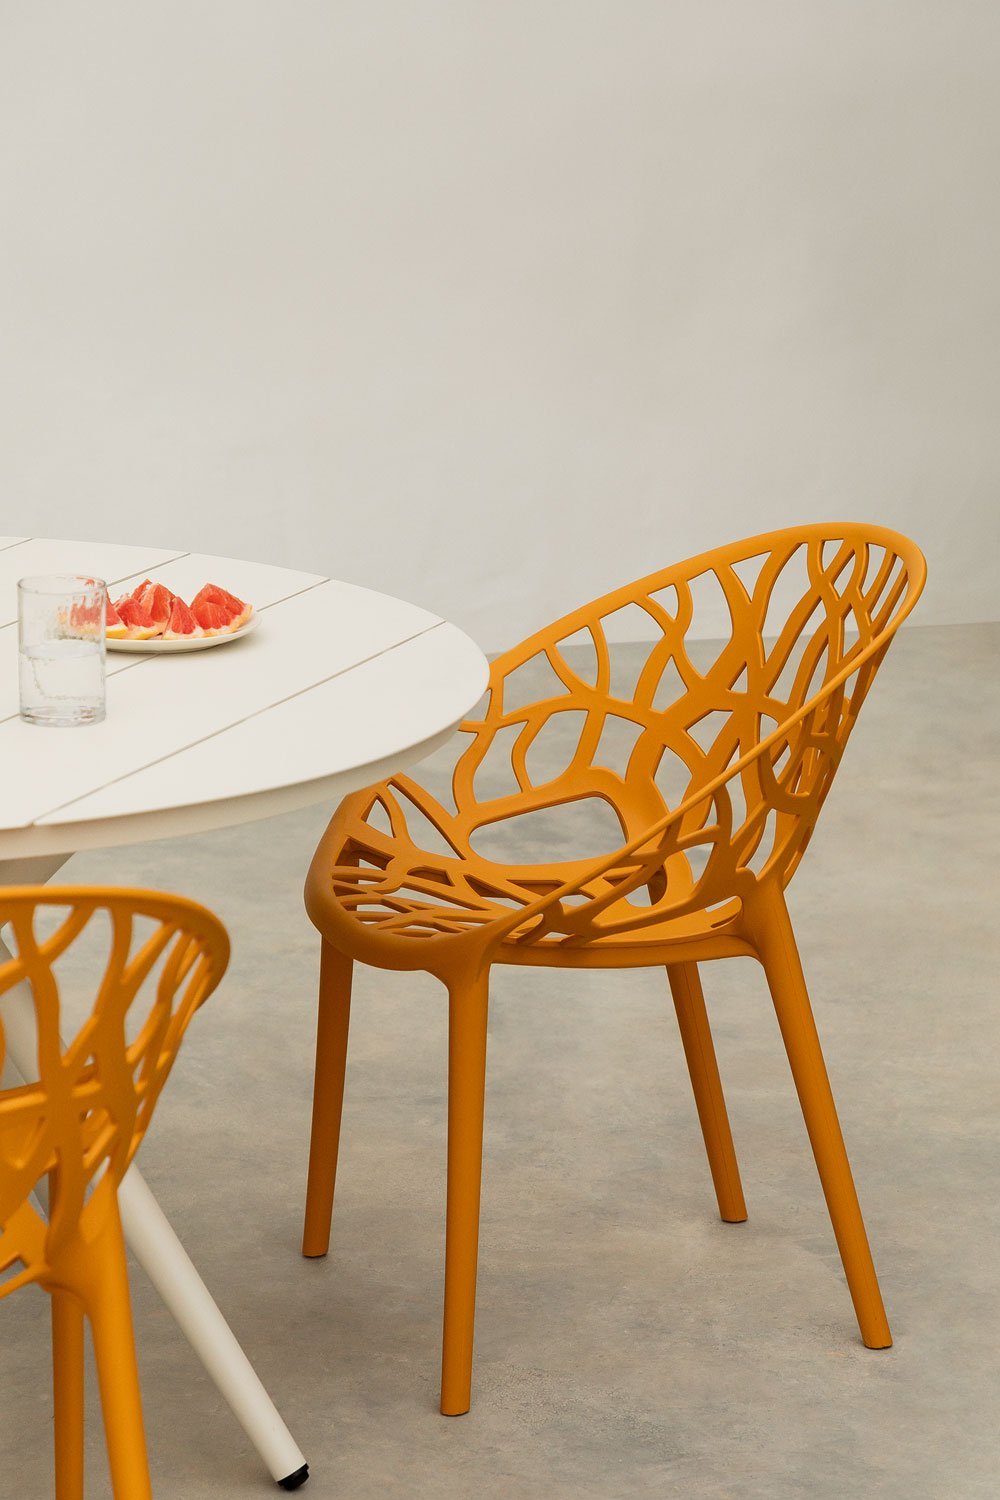 Ores Stackable Garden Chair, gallery image 1